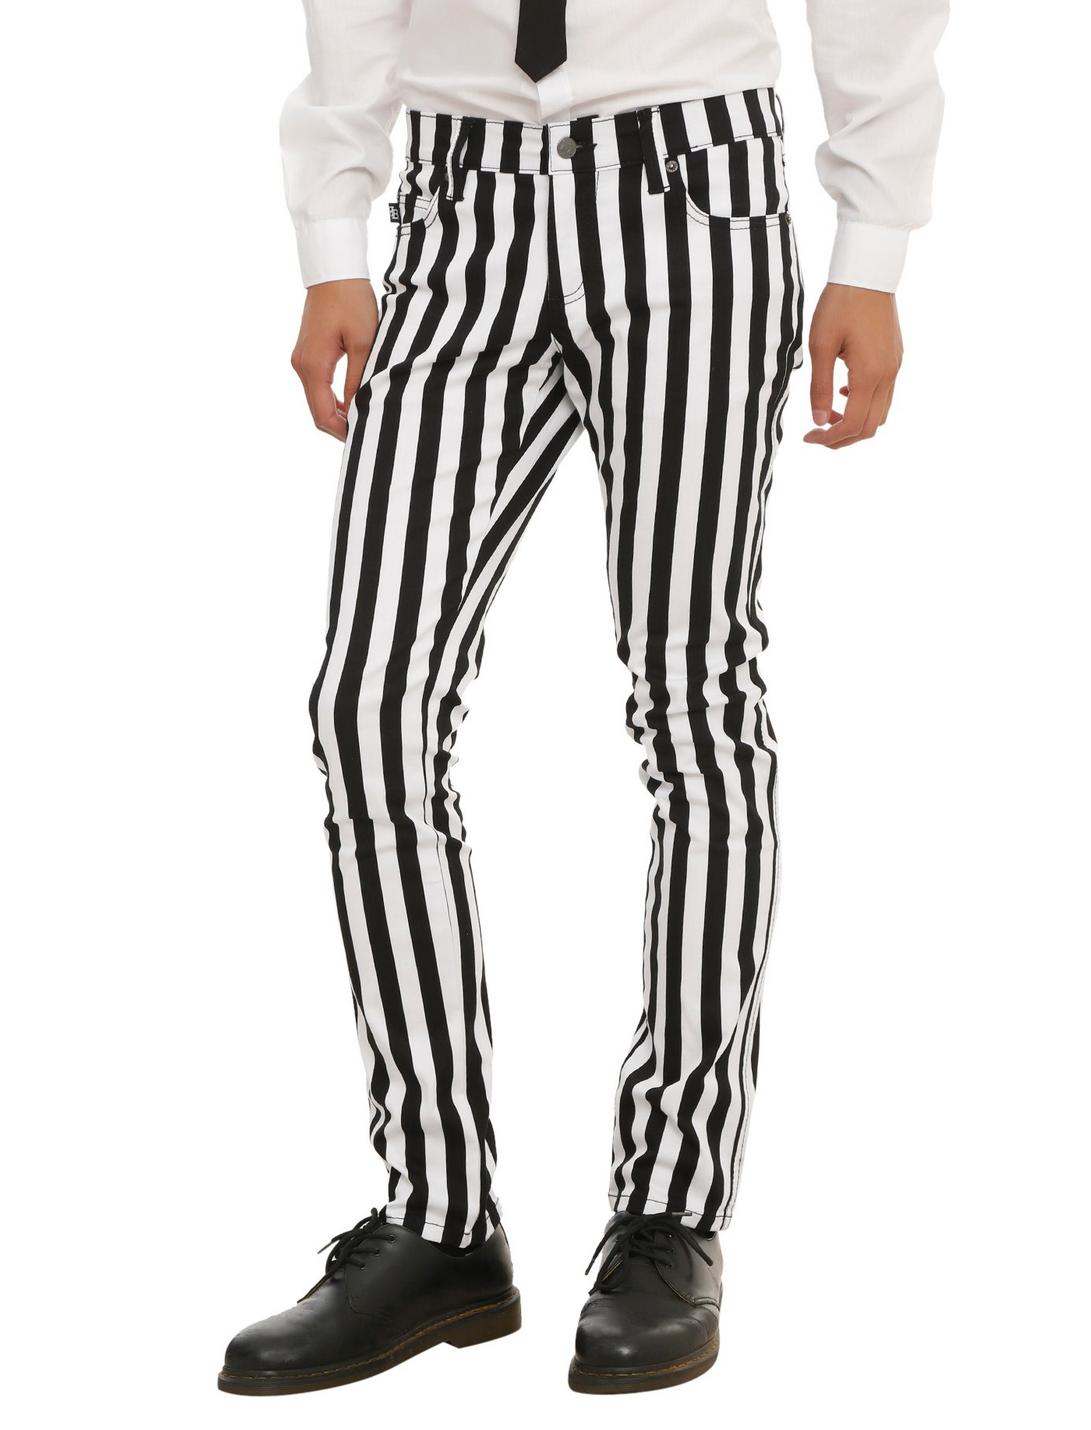 Royal Bones By Tripp Black & White Striped Skinny Pants, BLACK, hi-res